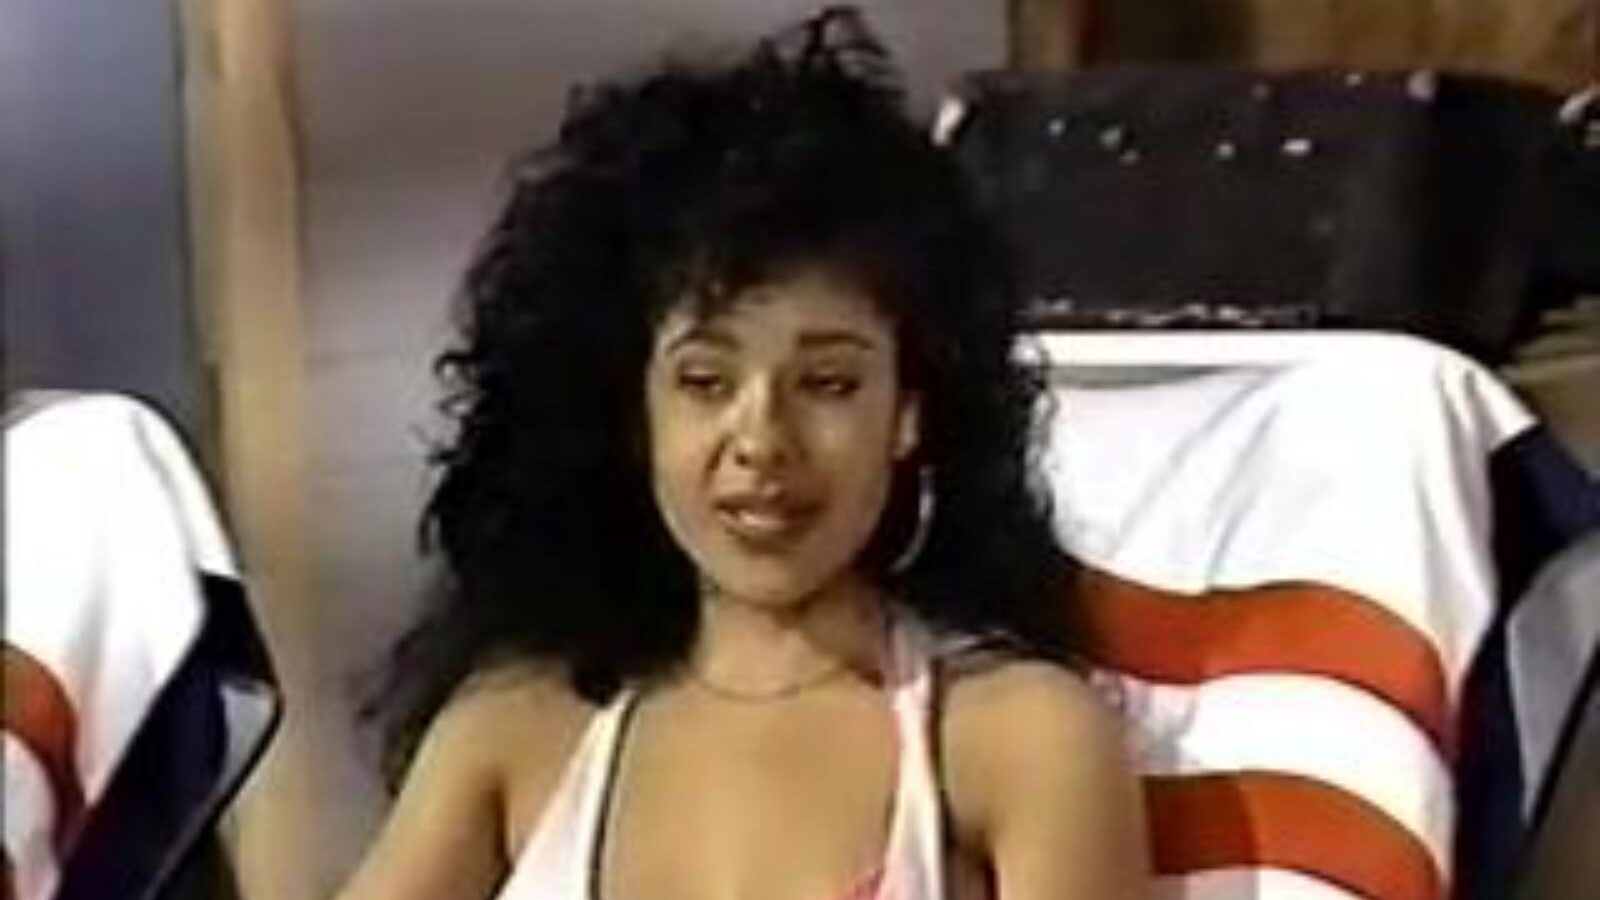 retro abd 693 90s: bedava 1992 porno video 0c - xhamster izle retro abd 693 90s tube hump film sahnesini xhamster'da ücretsiz, 1992'nin en seksi bevy'si, 90'ların retro, bedava usa ve abd bedava pornografi film sahneleri